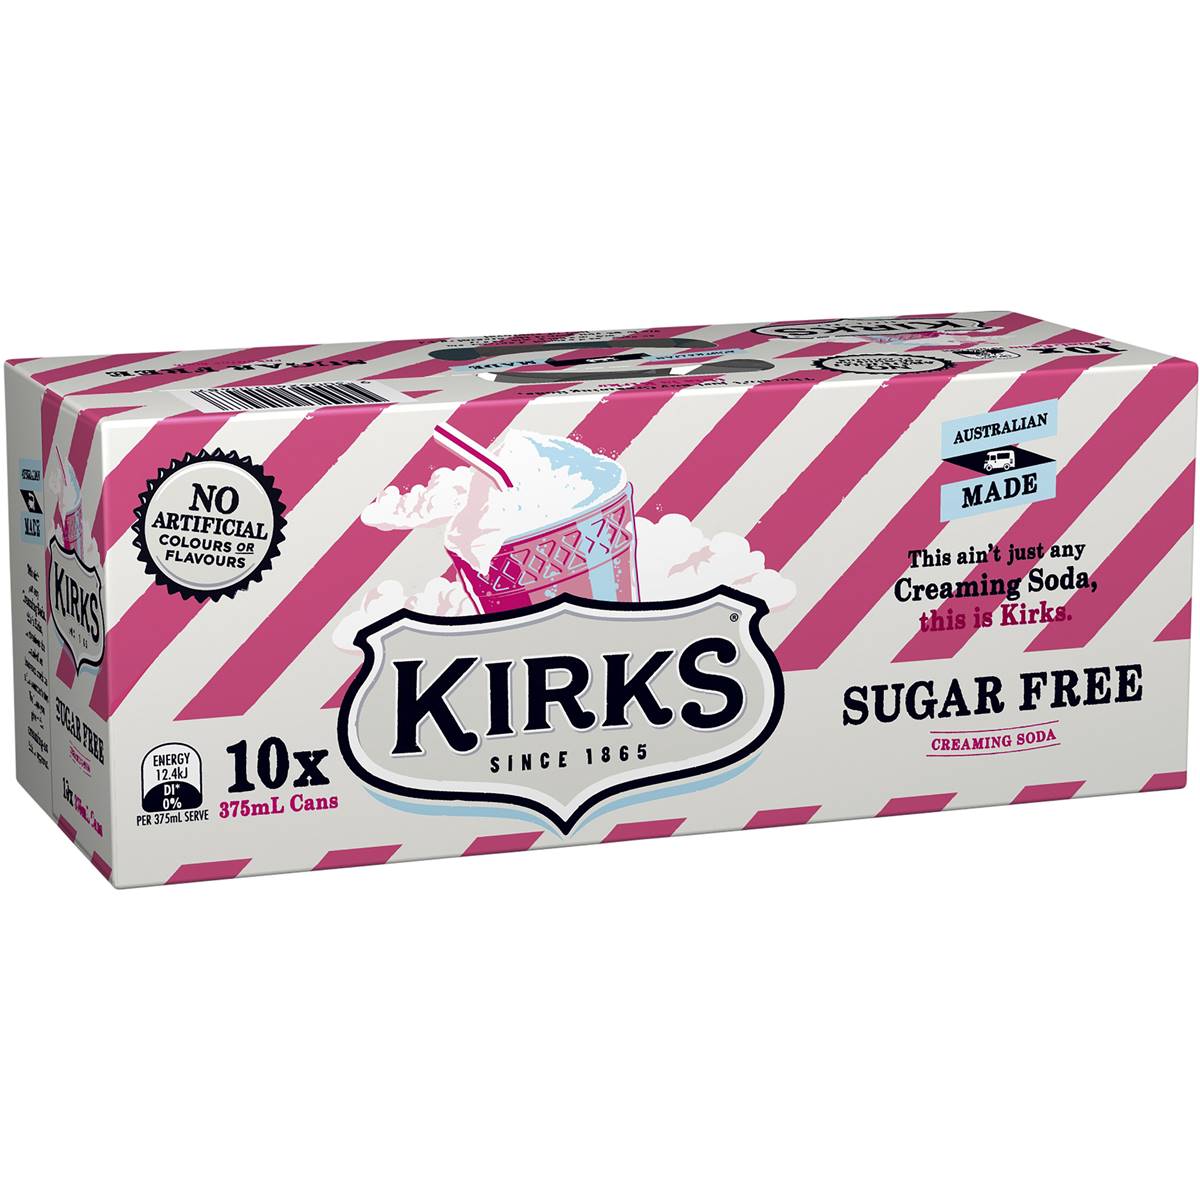 Kirks Creaming Soda Sugar Free 375ml x 10pk